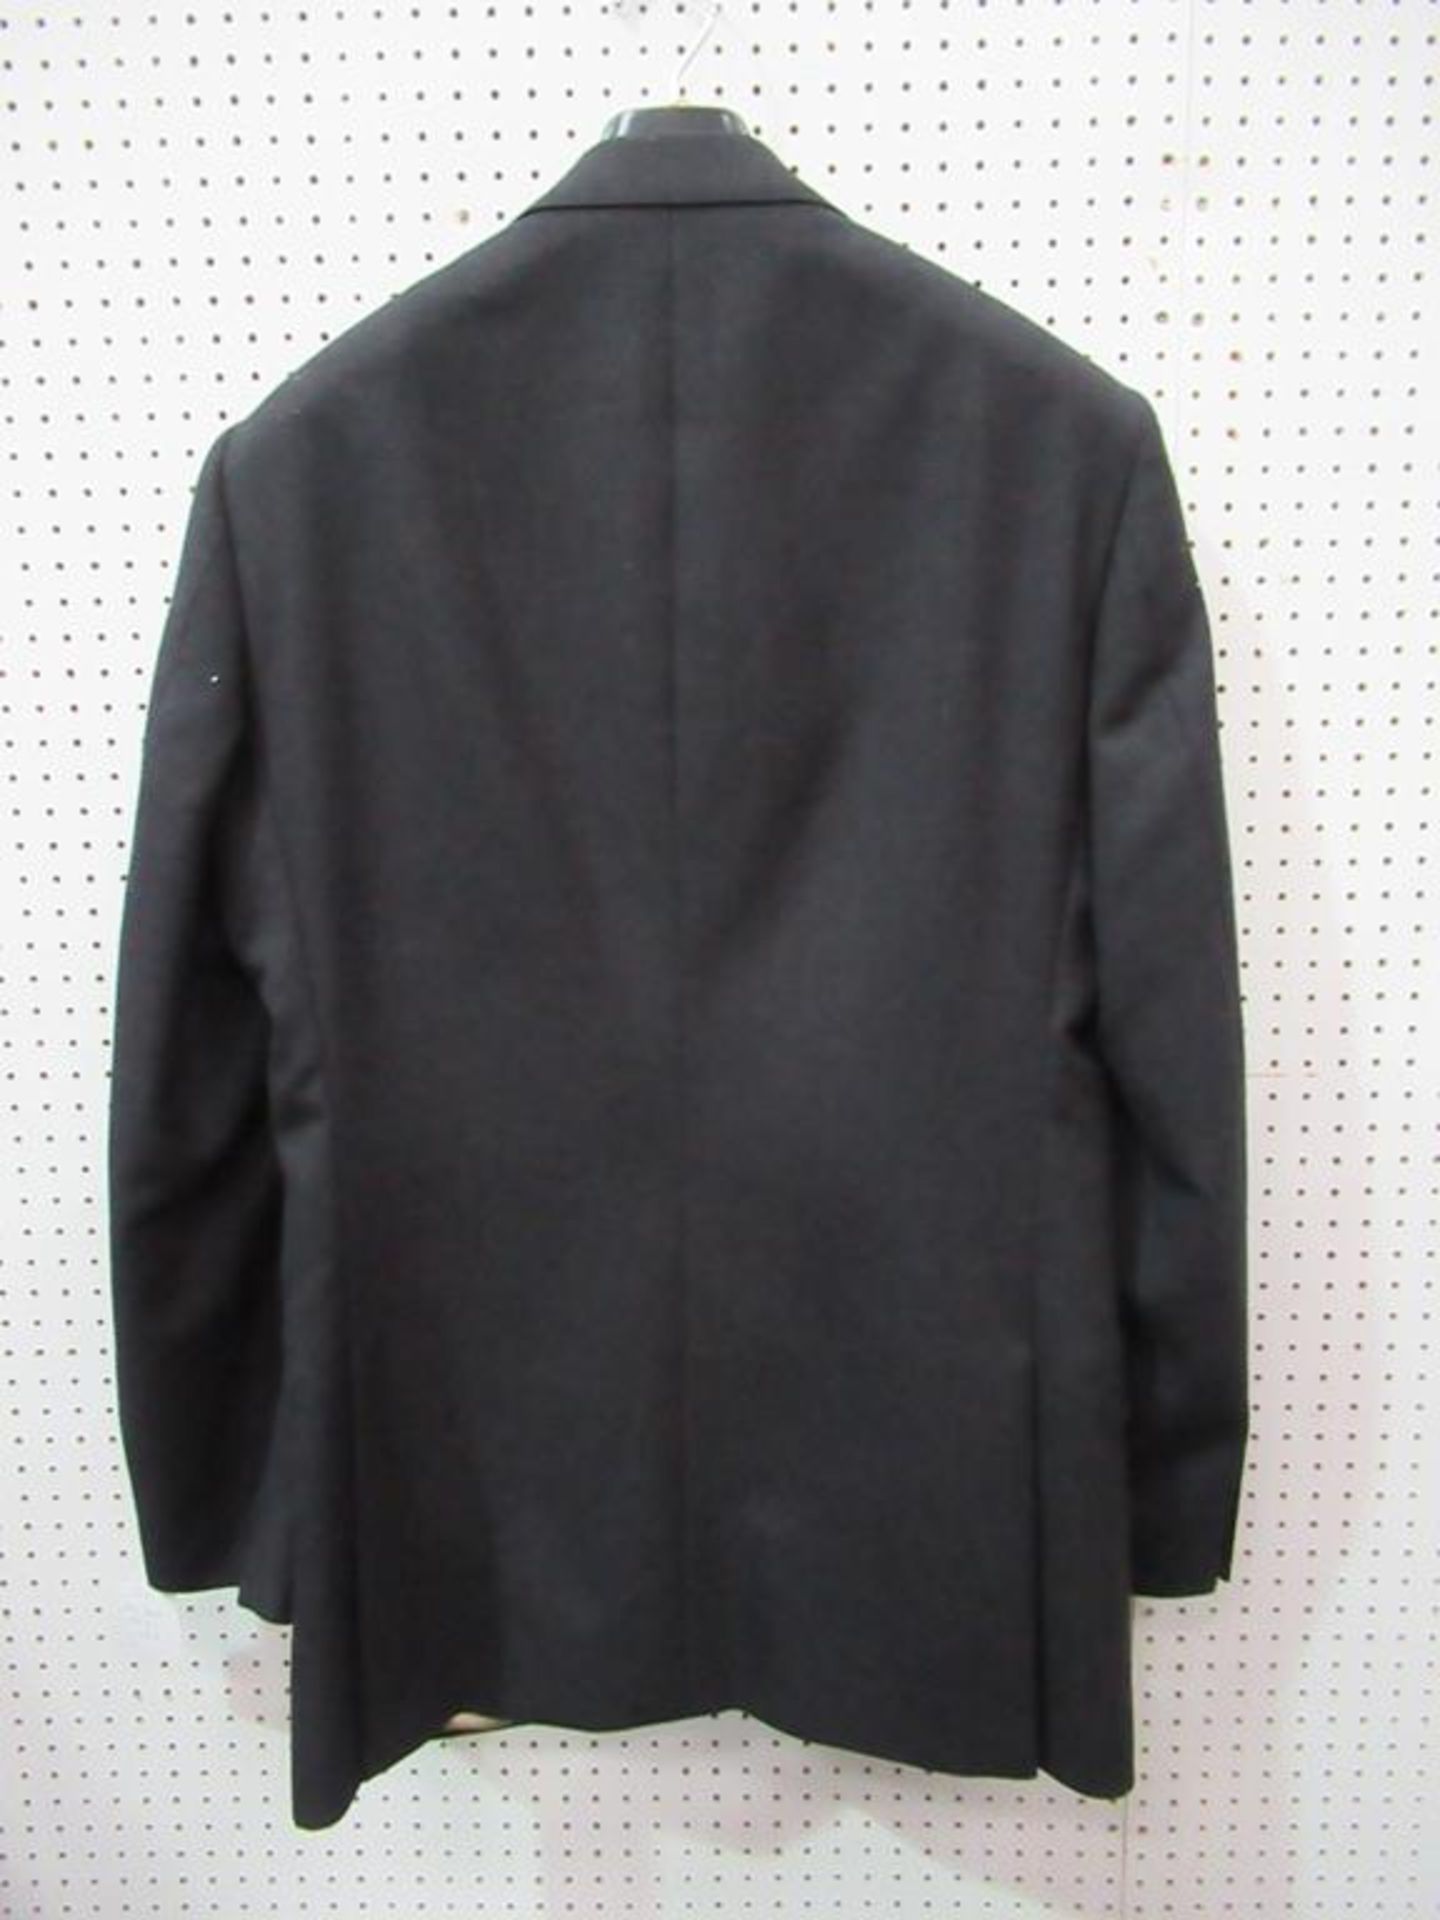 Wensum Tailoring 2 button slim house black jacket - Image 2 of 3